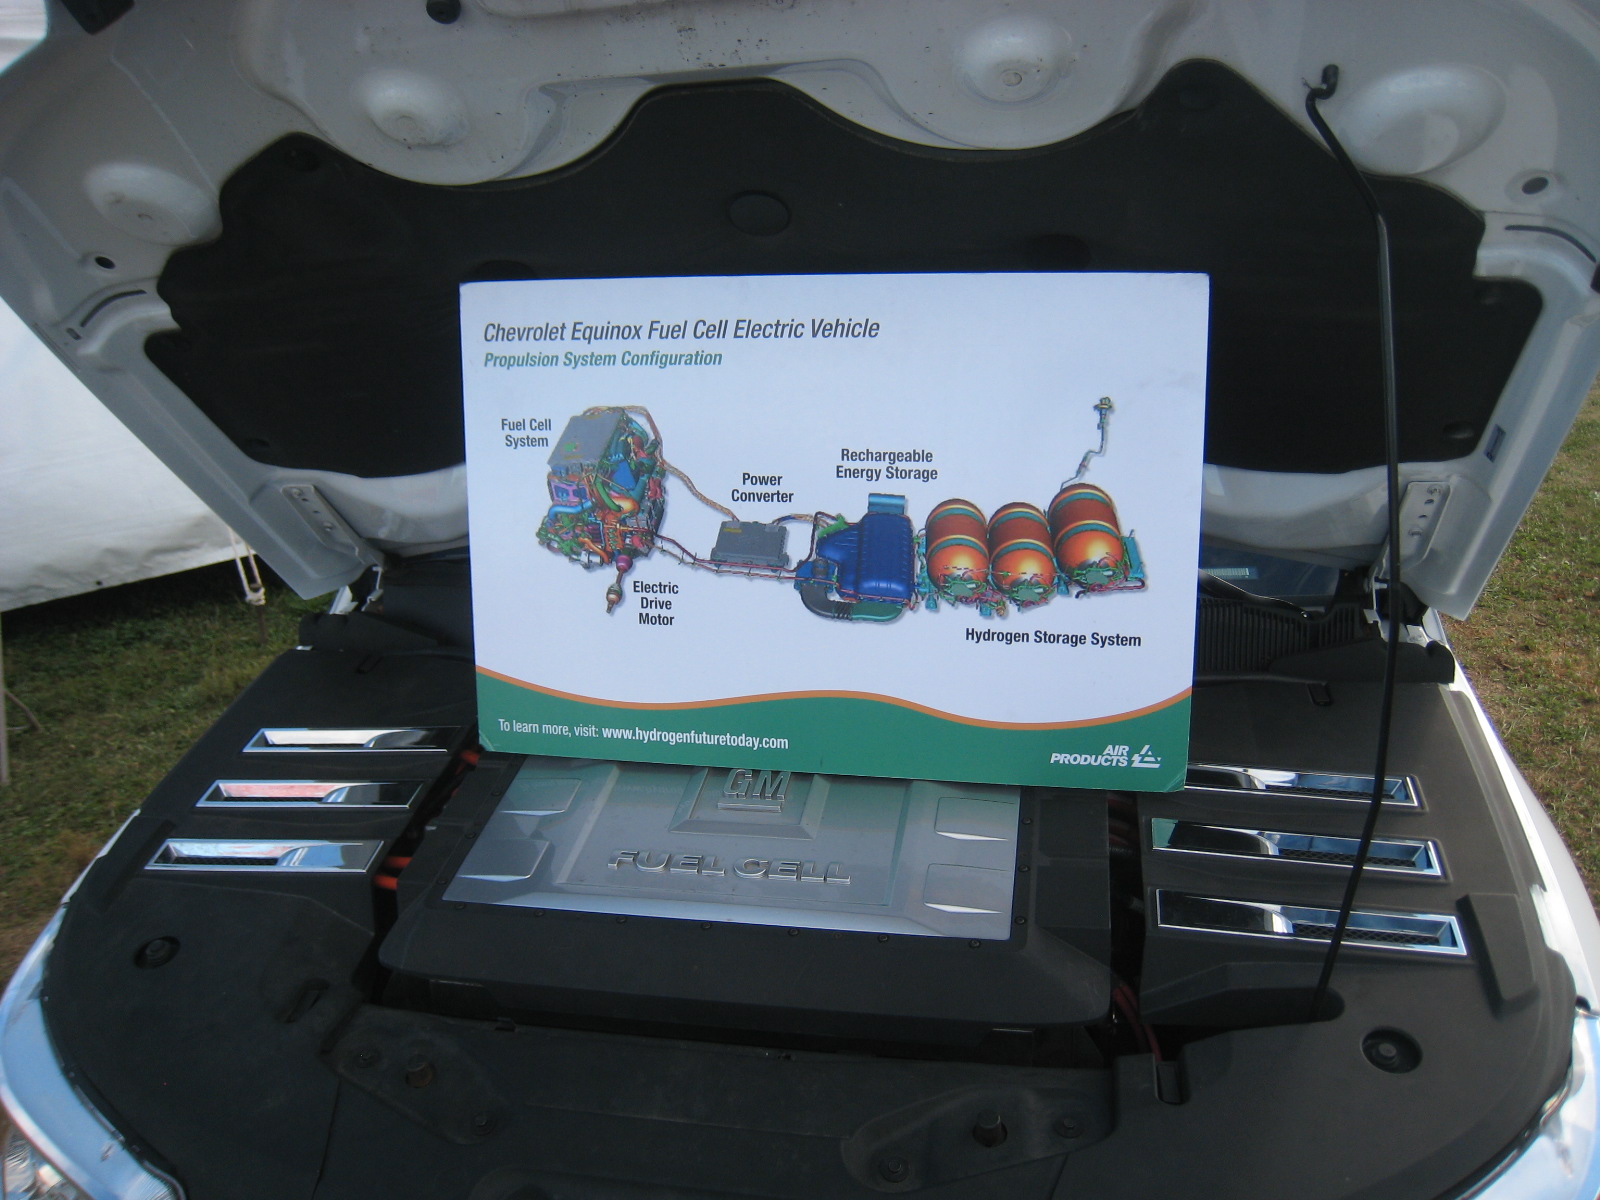 placard describing components of hydrogen-powered engine